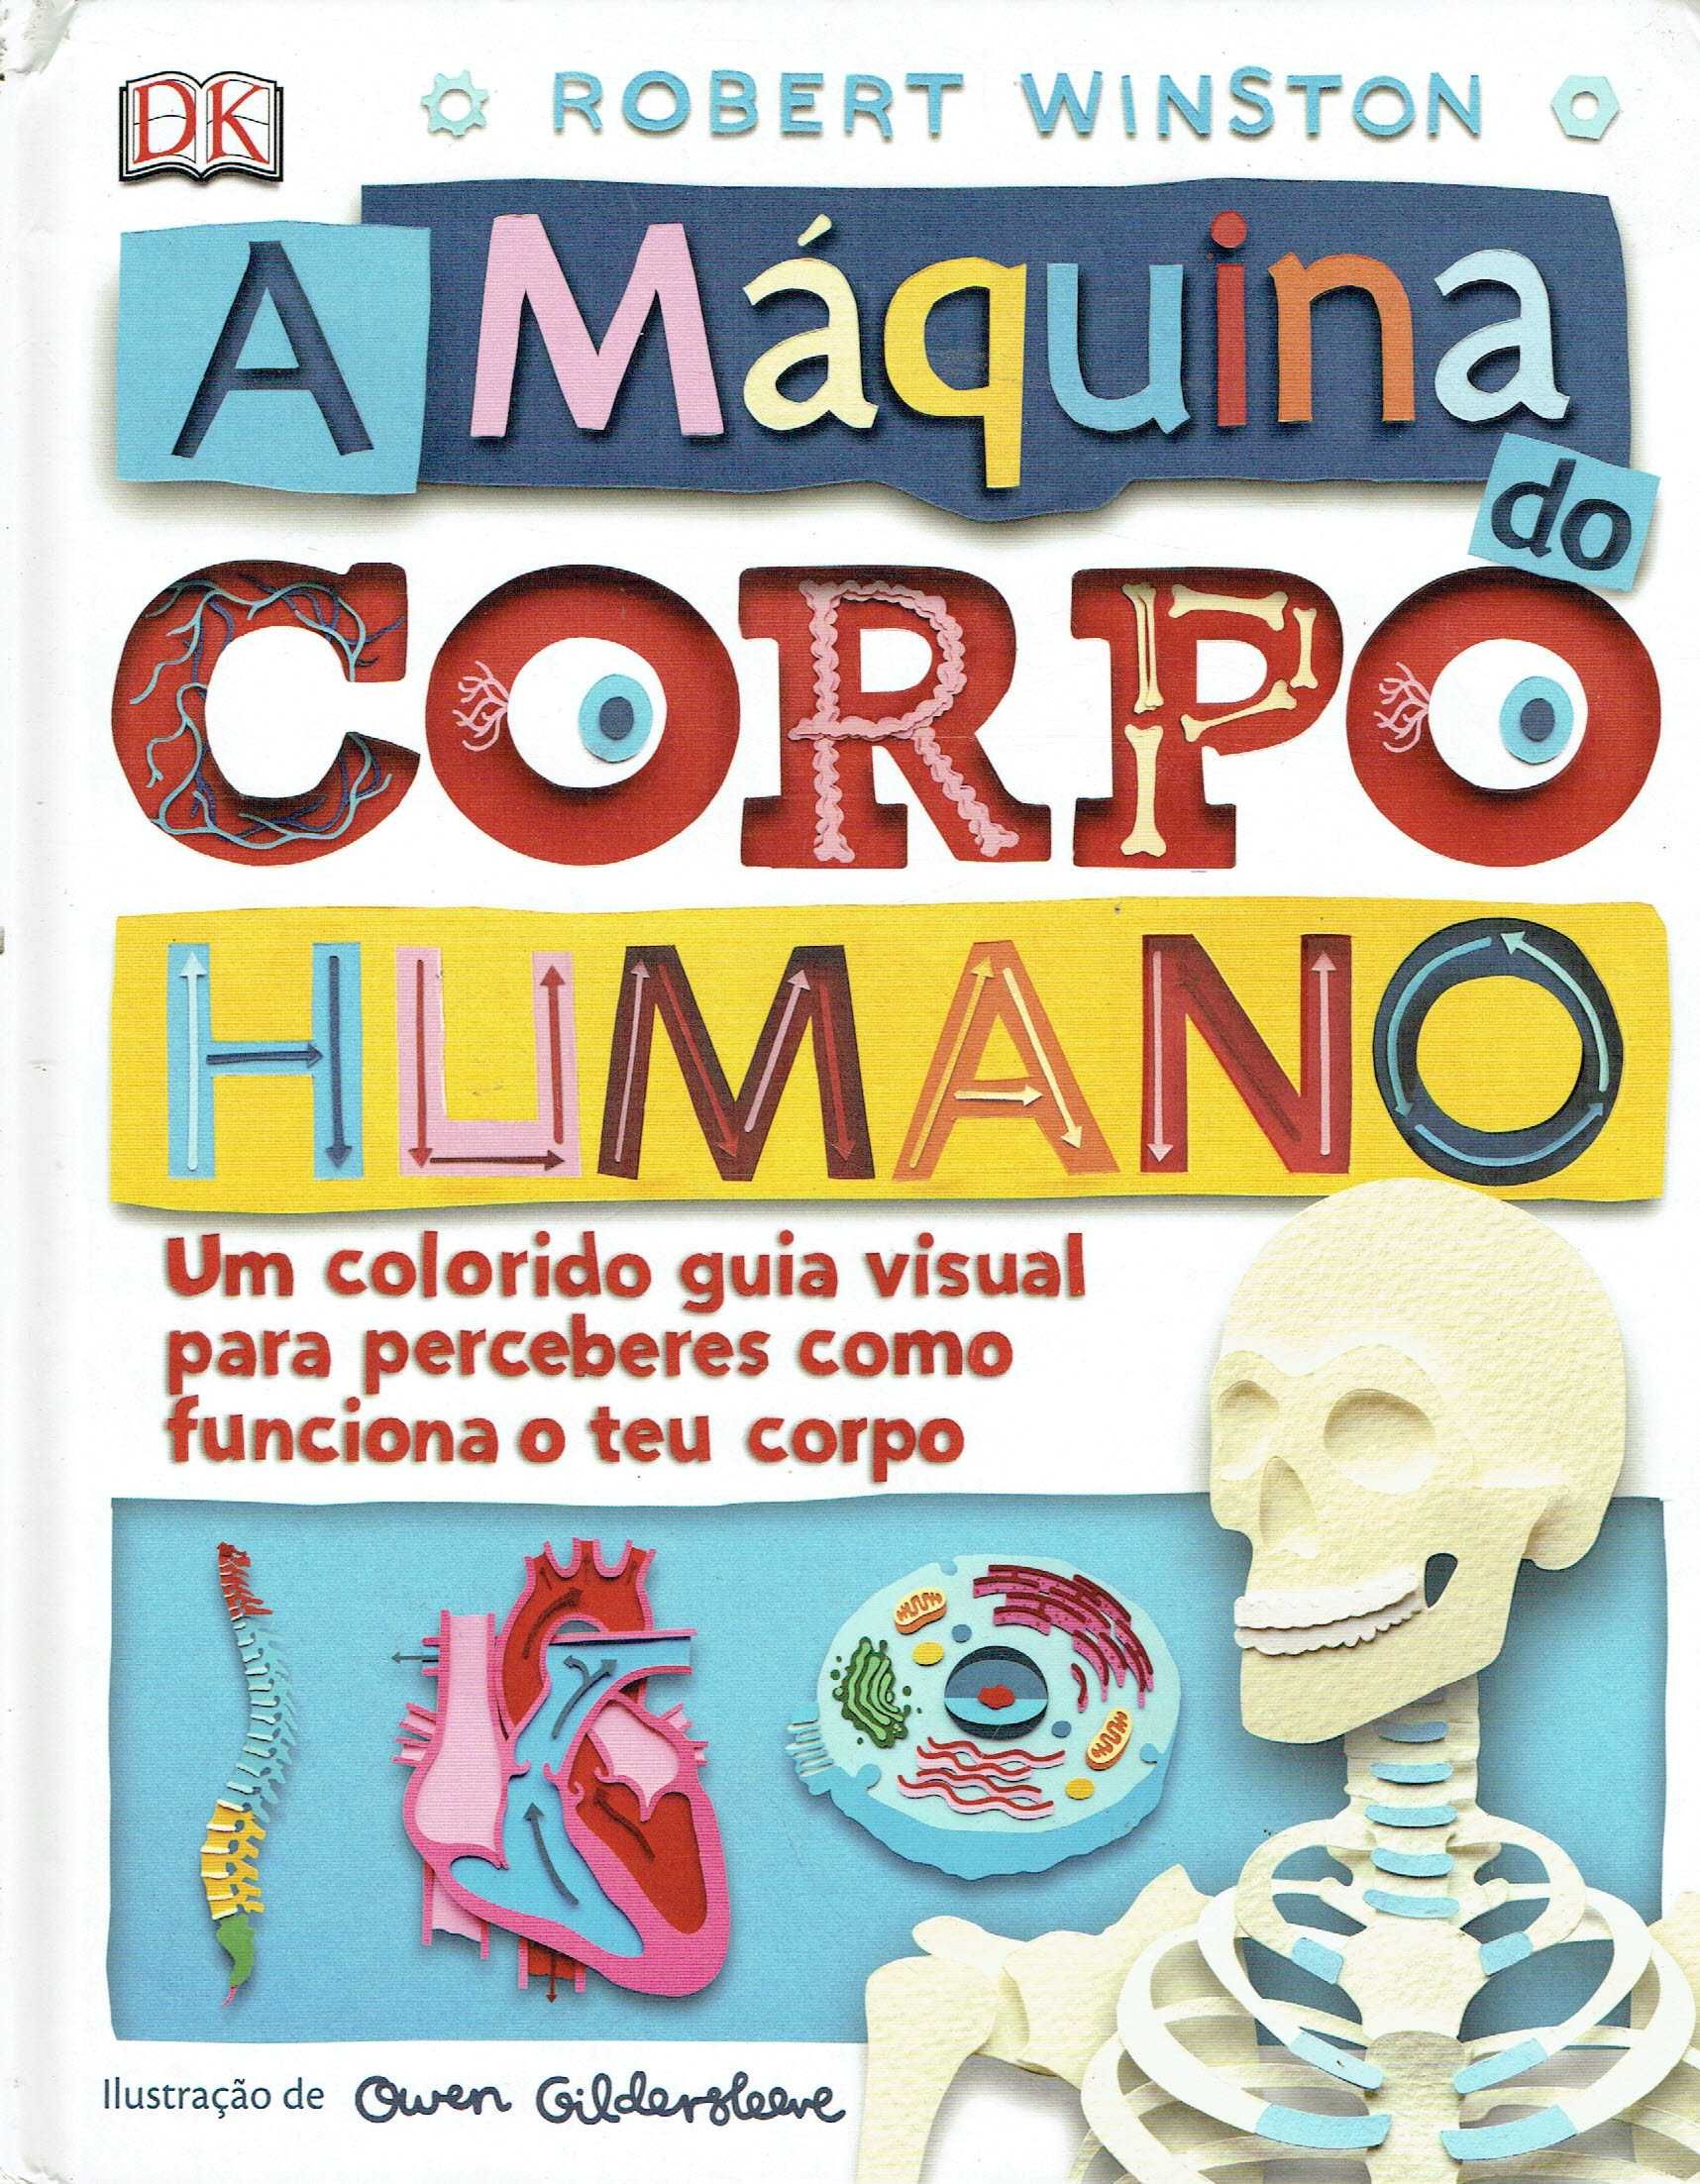 7909

A Máquina do Corpo Humano
editor: Porto Editora